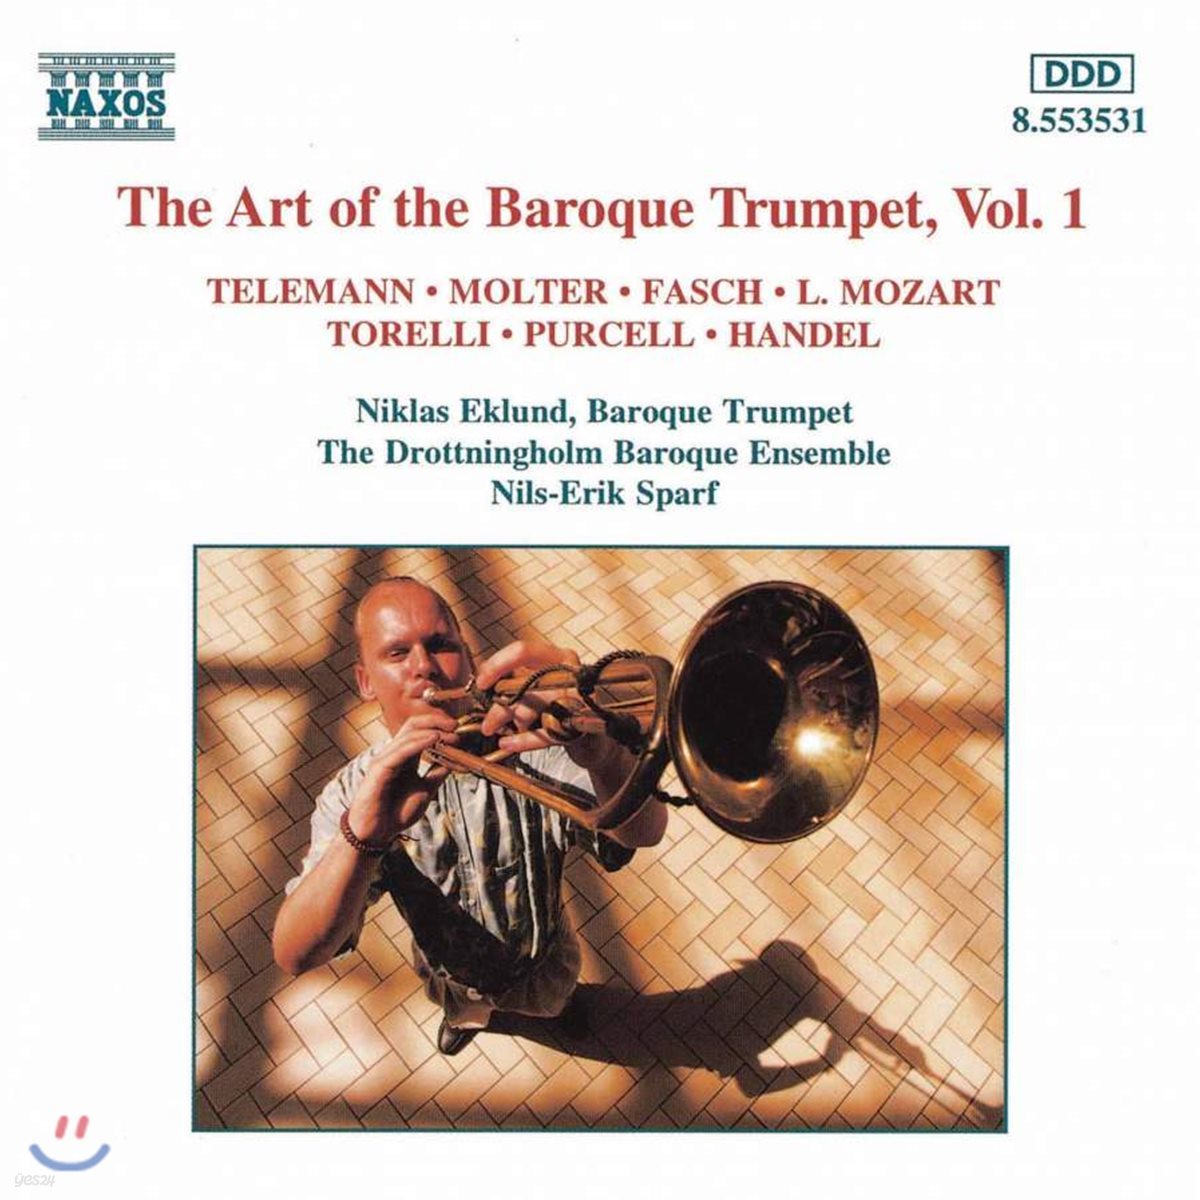 Niklas Eklund 바로크 트럼펫의 예술 1집 - 텔레만 / 파슈 / 토렐리 (The Art of the Baroque Trumpet - Telemann / Fasch / Torelli)